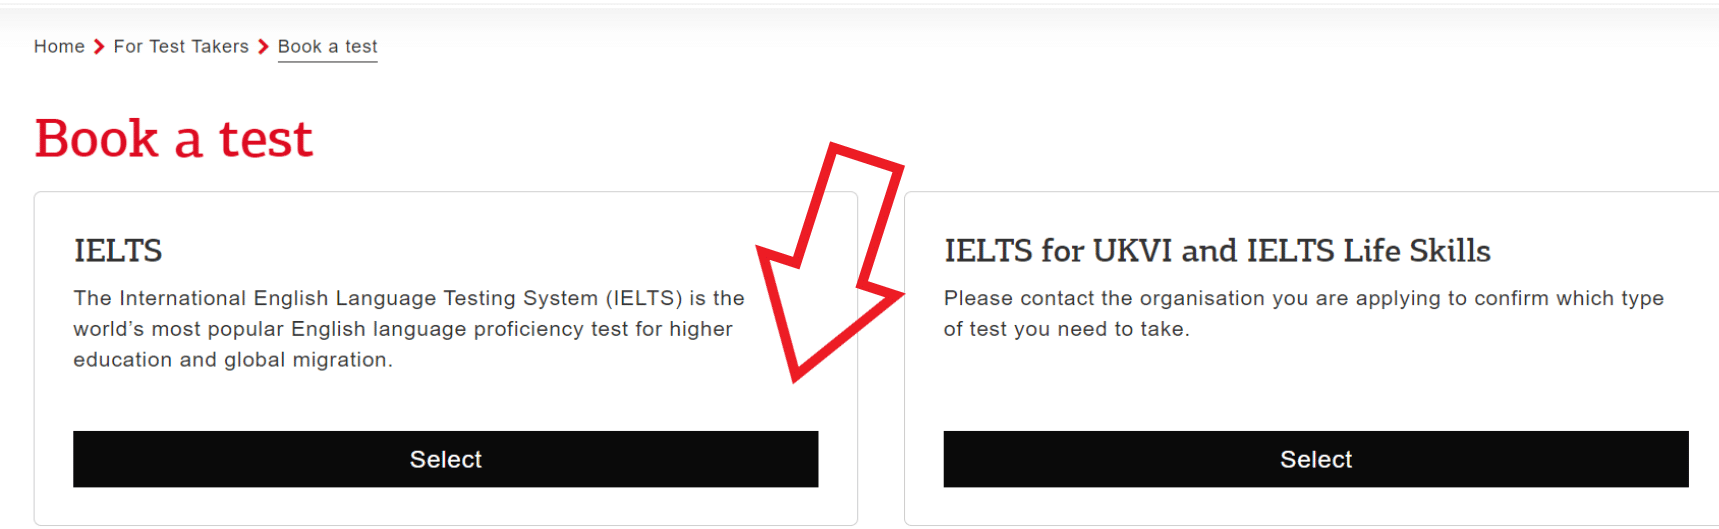 tutorial for booking an ielts test